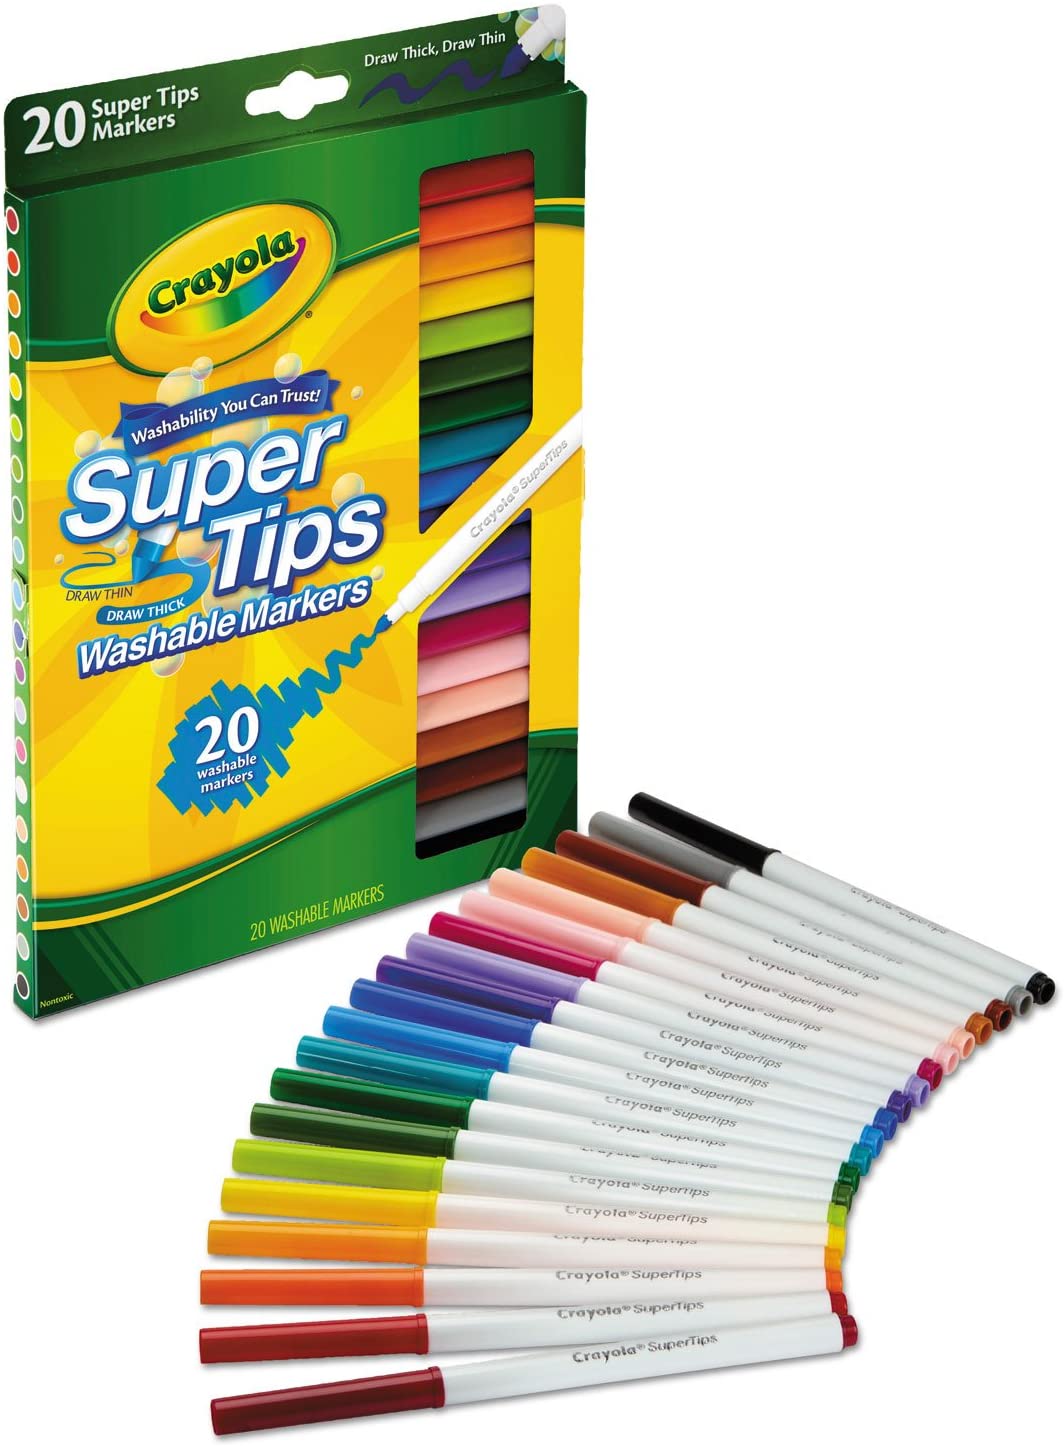 Crayola Metallic Markers Assorted Colors